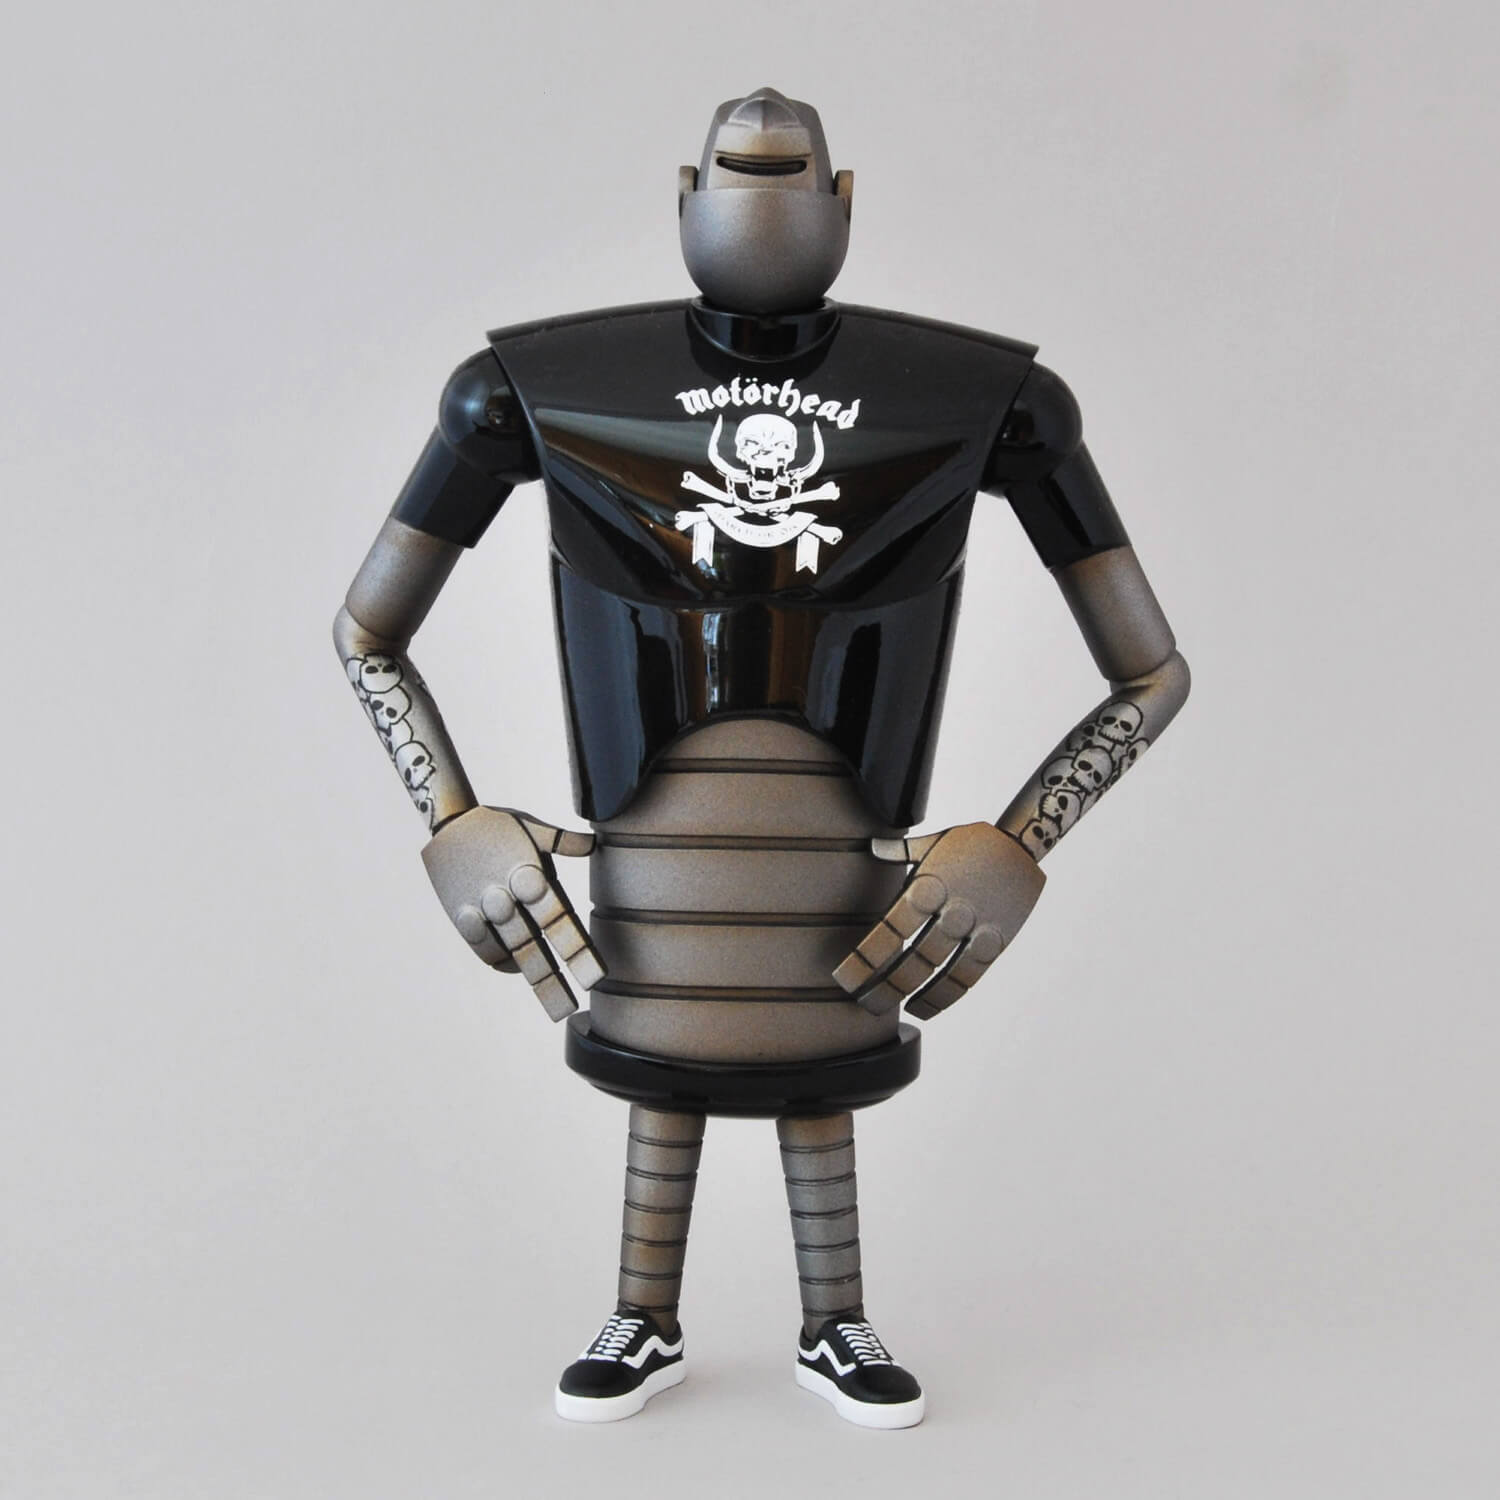 Urban Iron - Motorhead By Robotic Industries 2017 Toycon UK clothing off